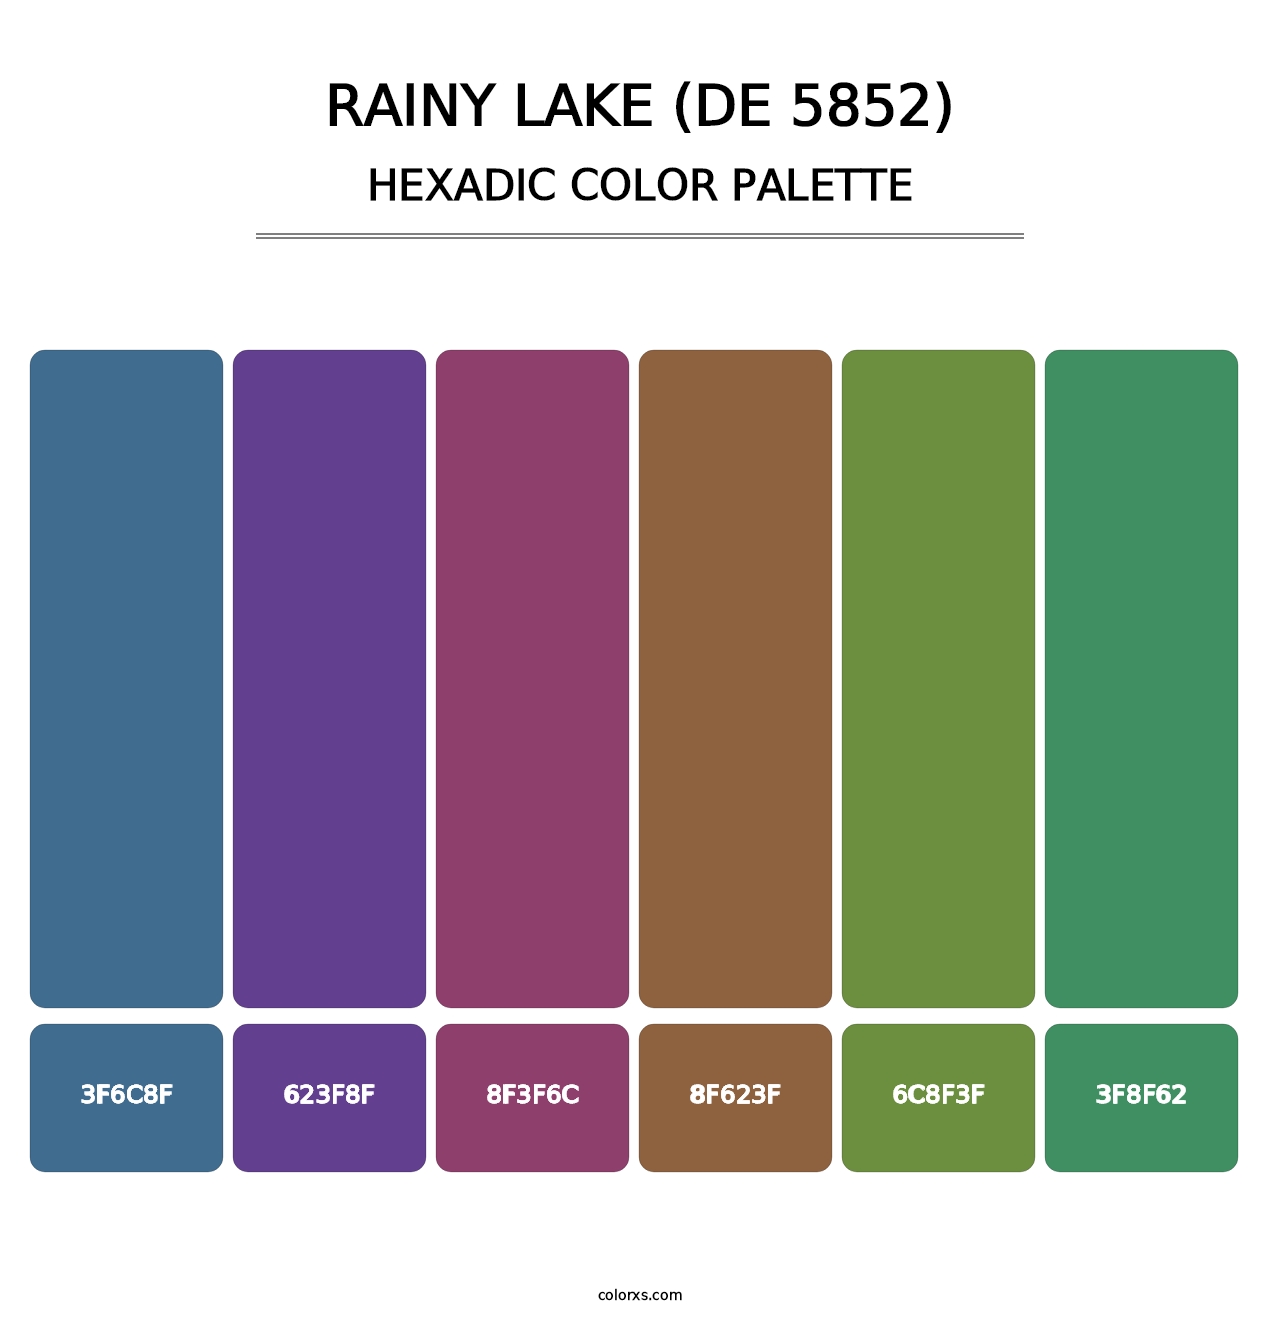 Rainy Lake (DE 5852) - Hexadic Color Palette